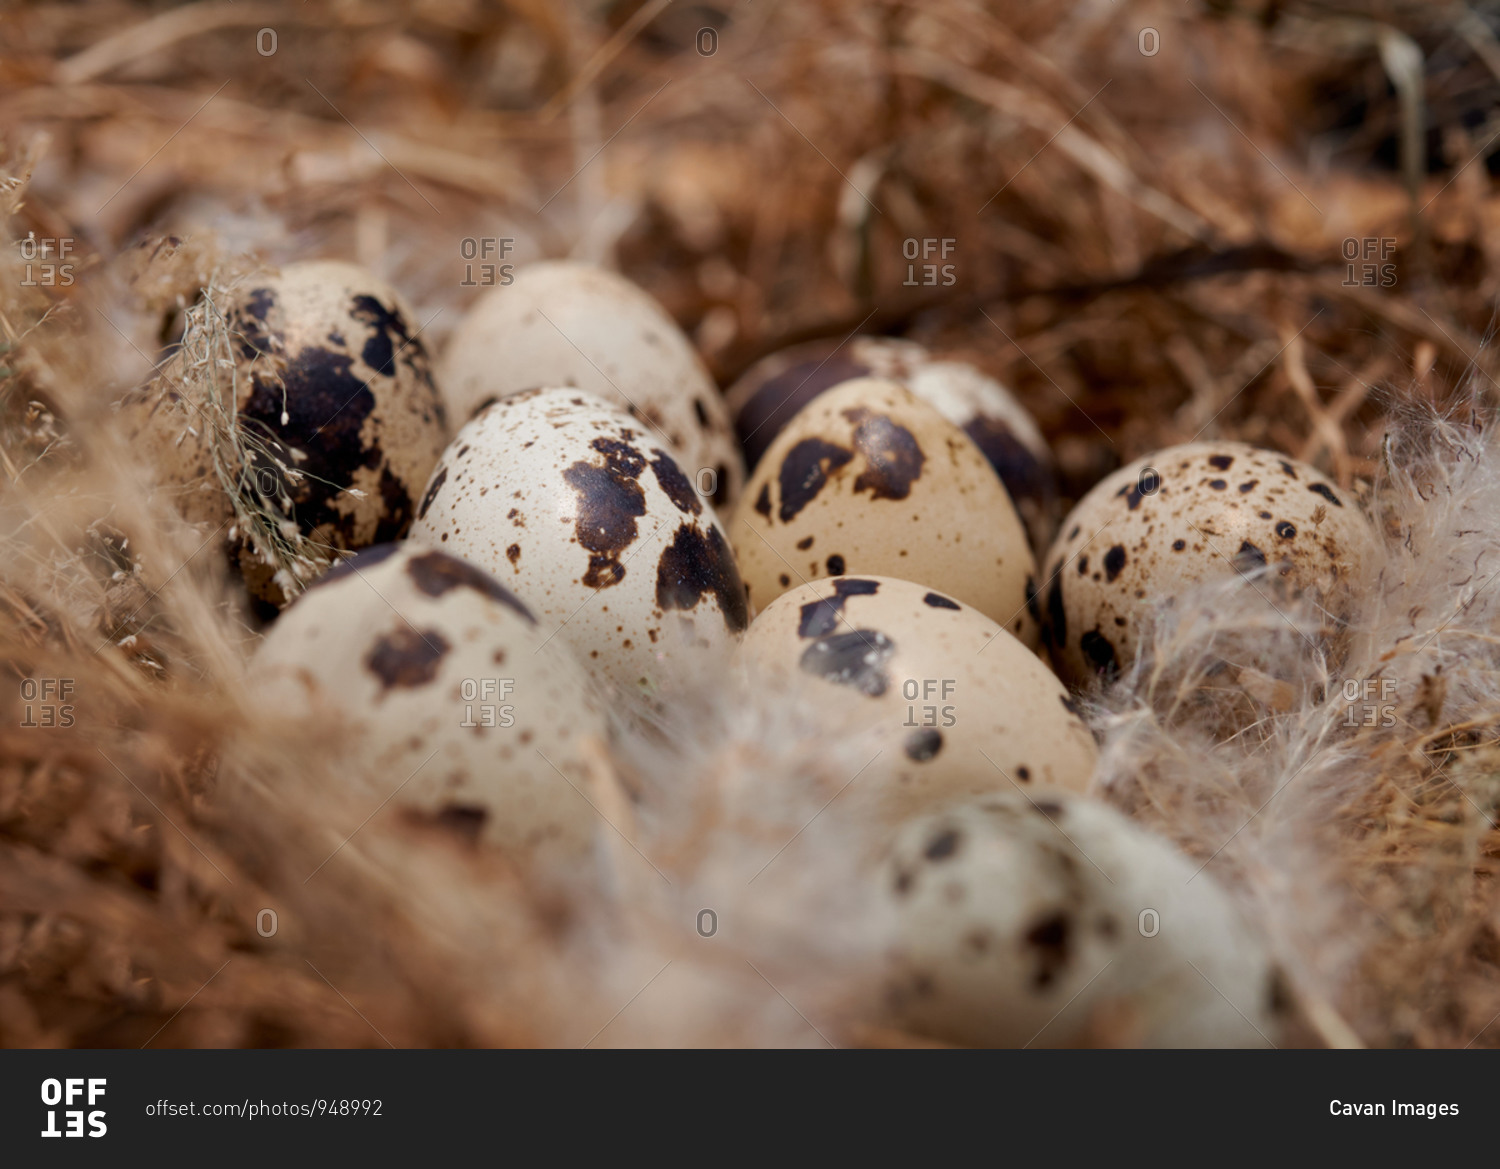 Quail eggs in hay nest